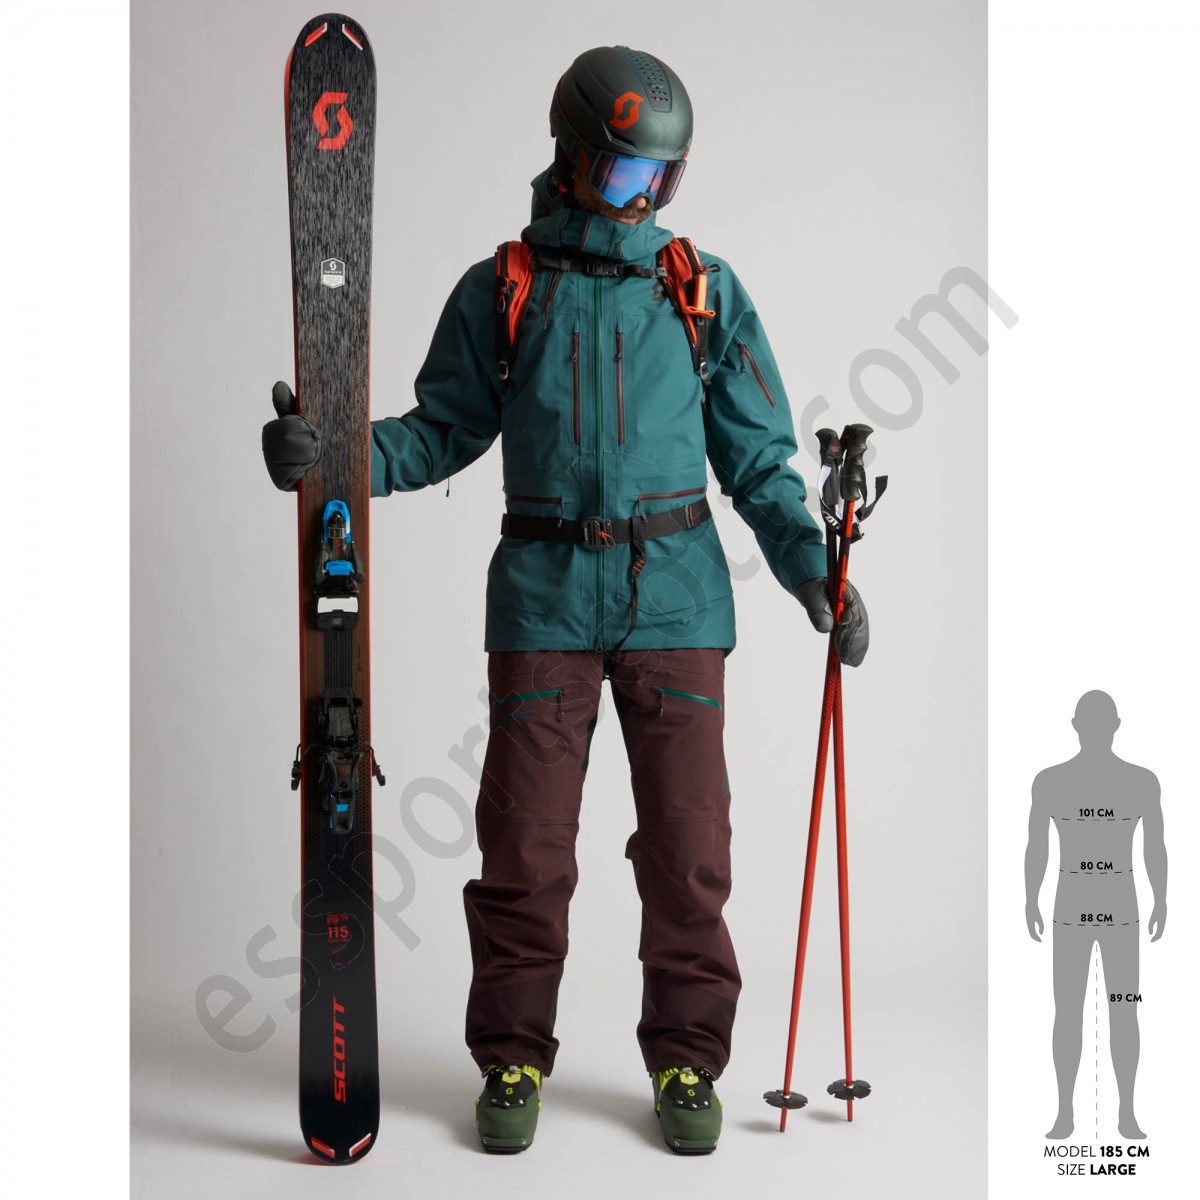 Scott Tienda ◇ Freeguide Carbon Ski Boot - -11